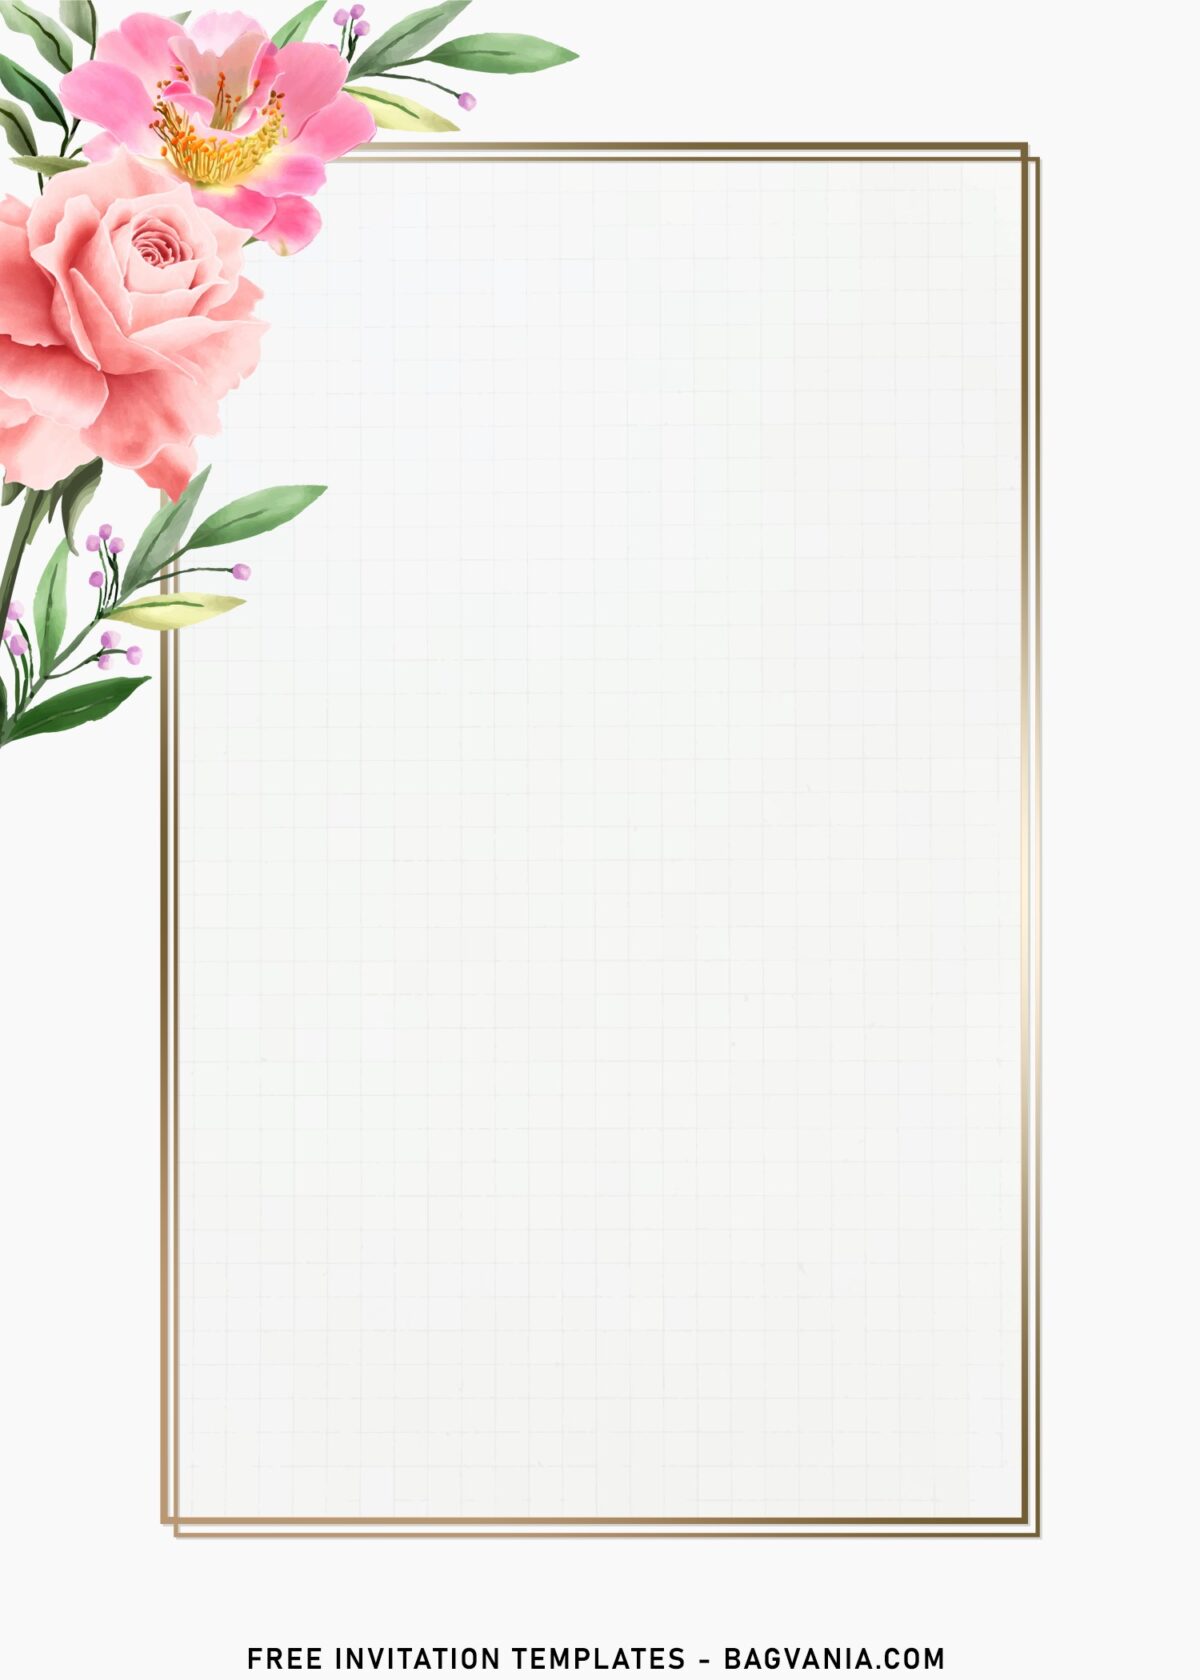 7+ Simple Romantic Blush Watercolor Floral Invitation Templates with portrait orientation design